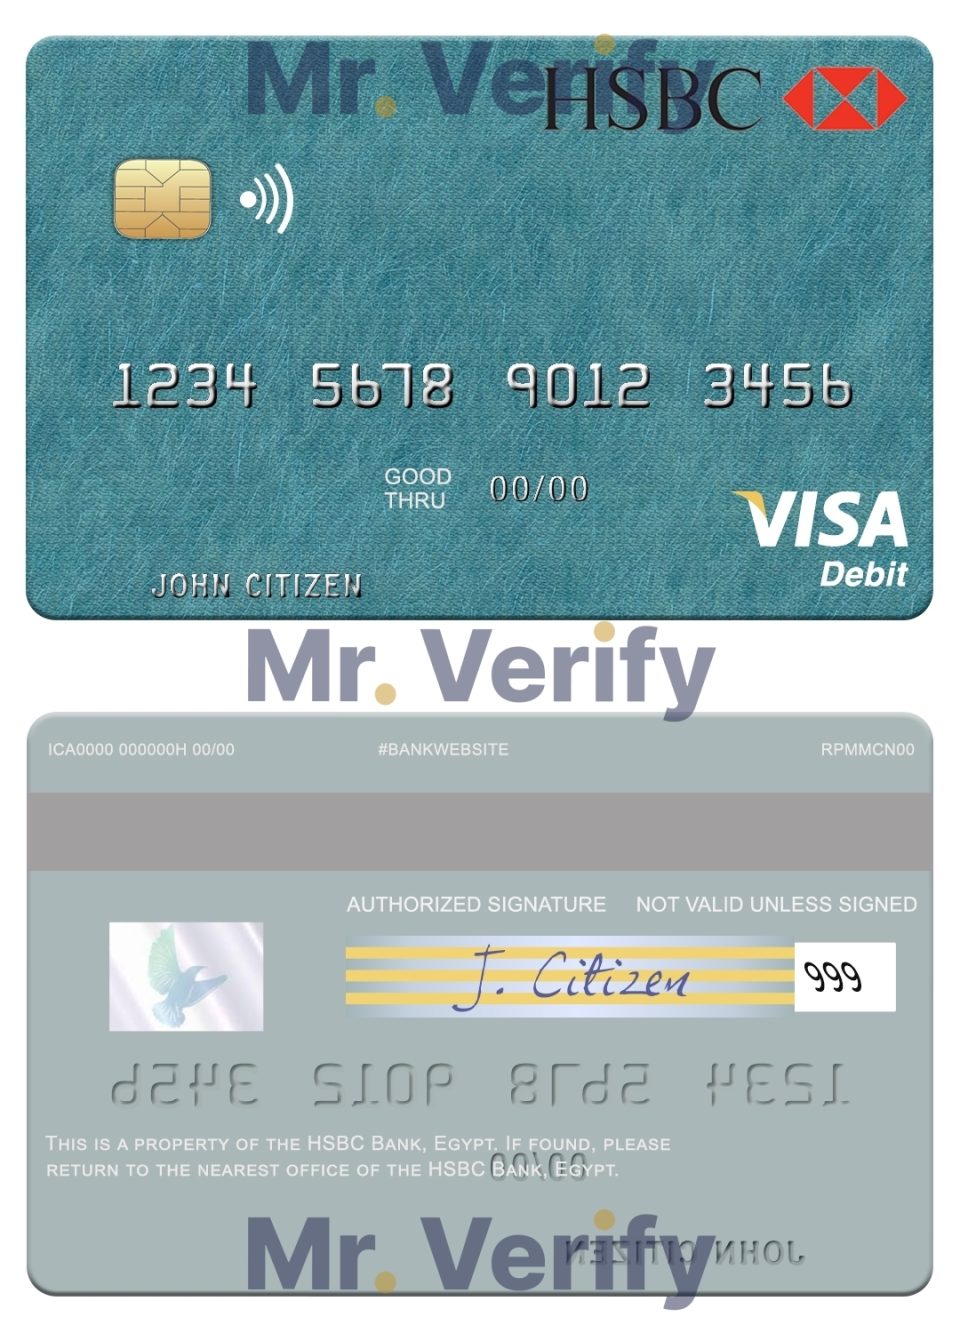 Fillable Egypt HSBC Bank visa debit card Templates | Layer-Based PSD